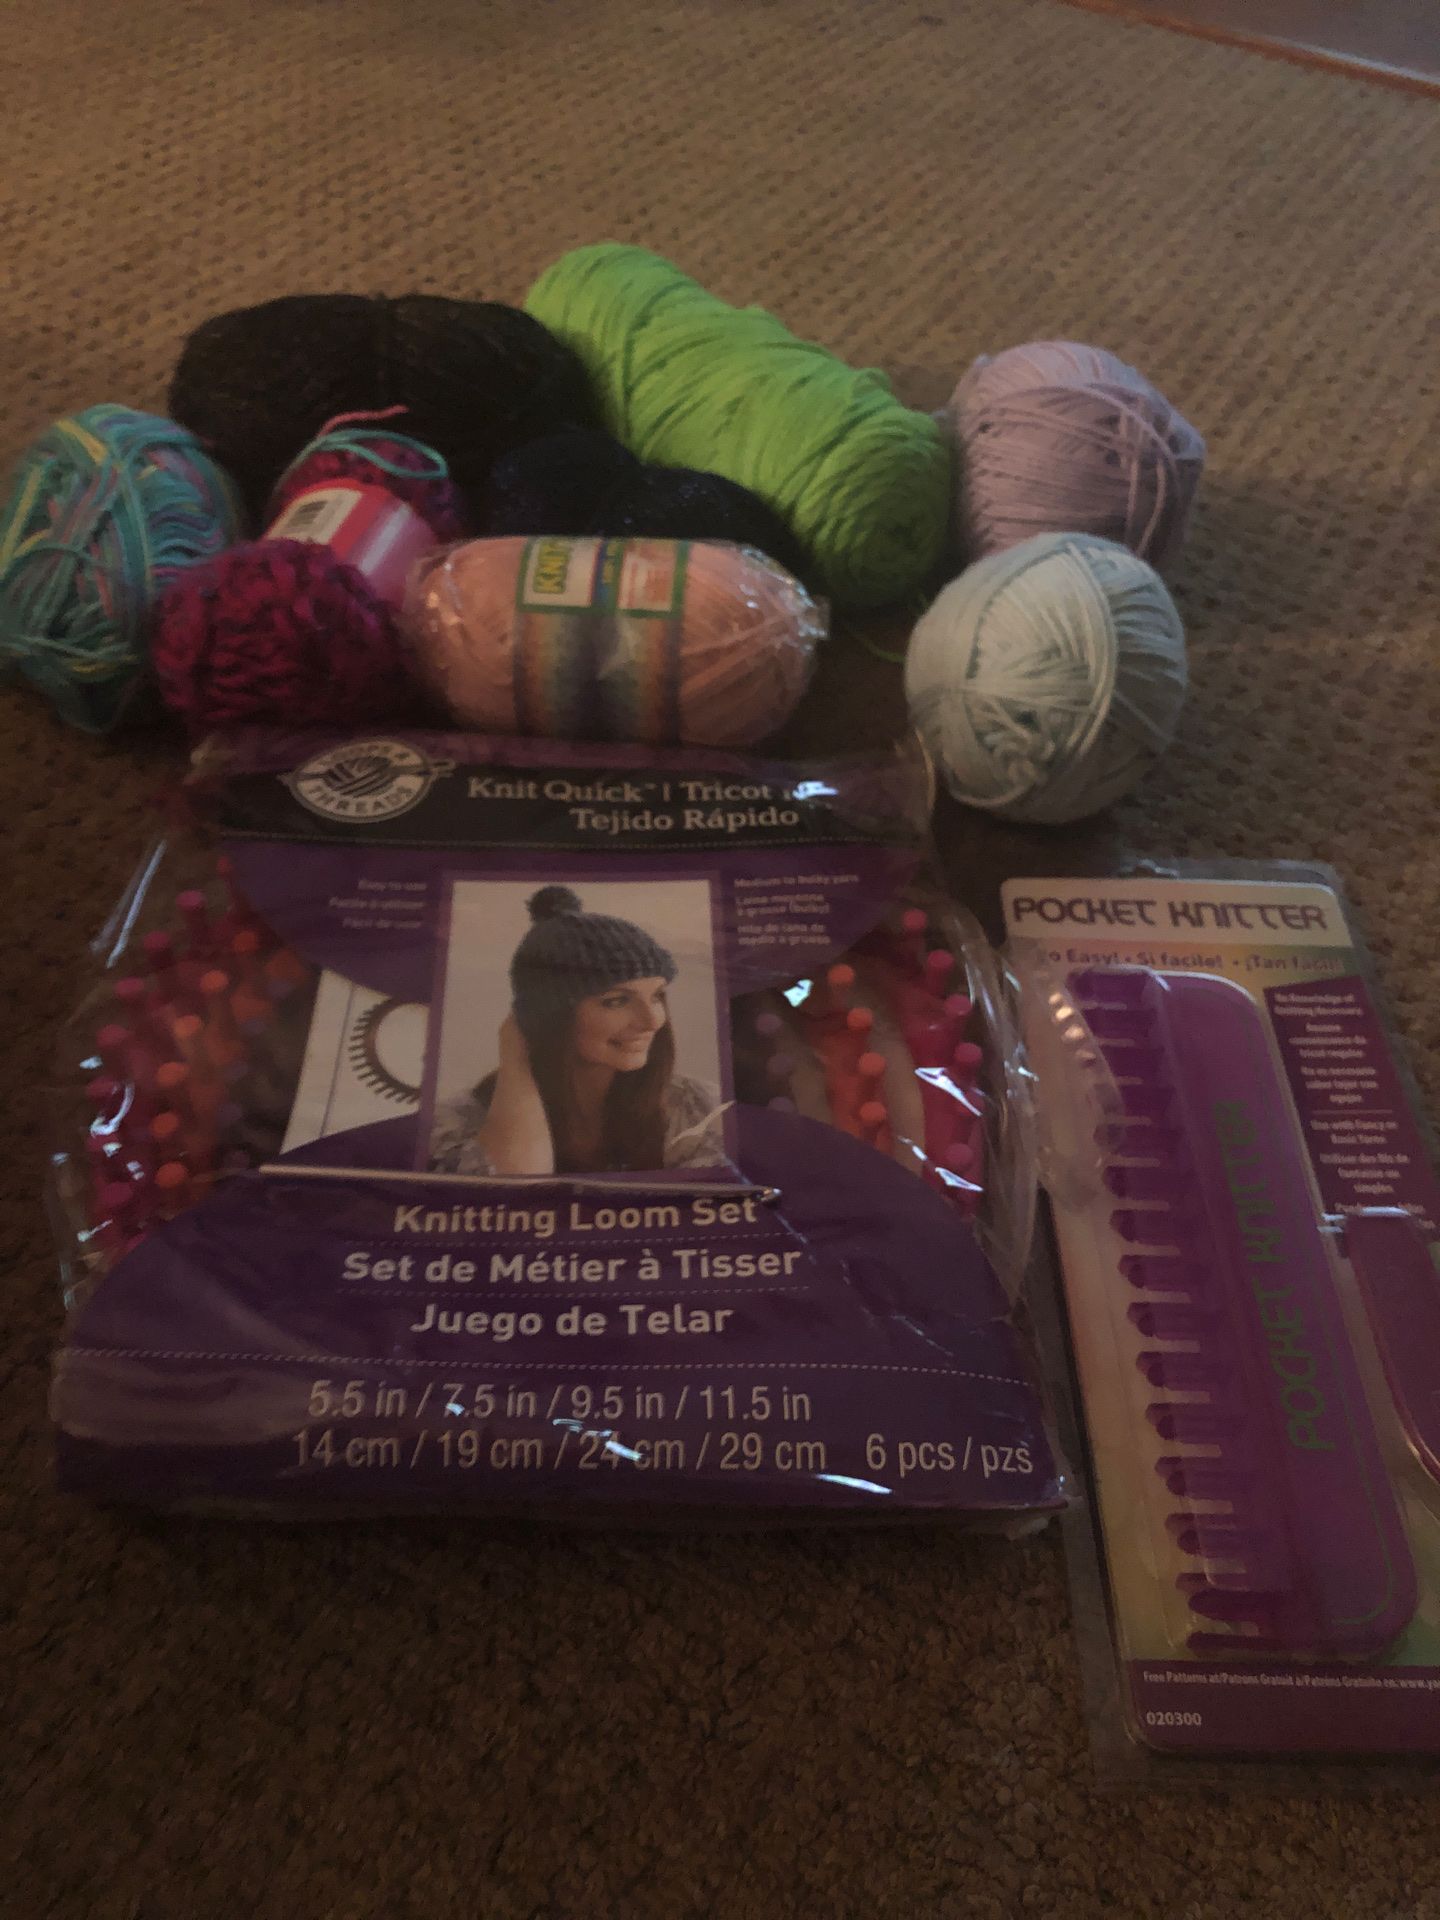 Knitting kit with yarn